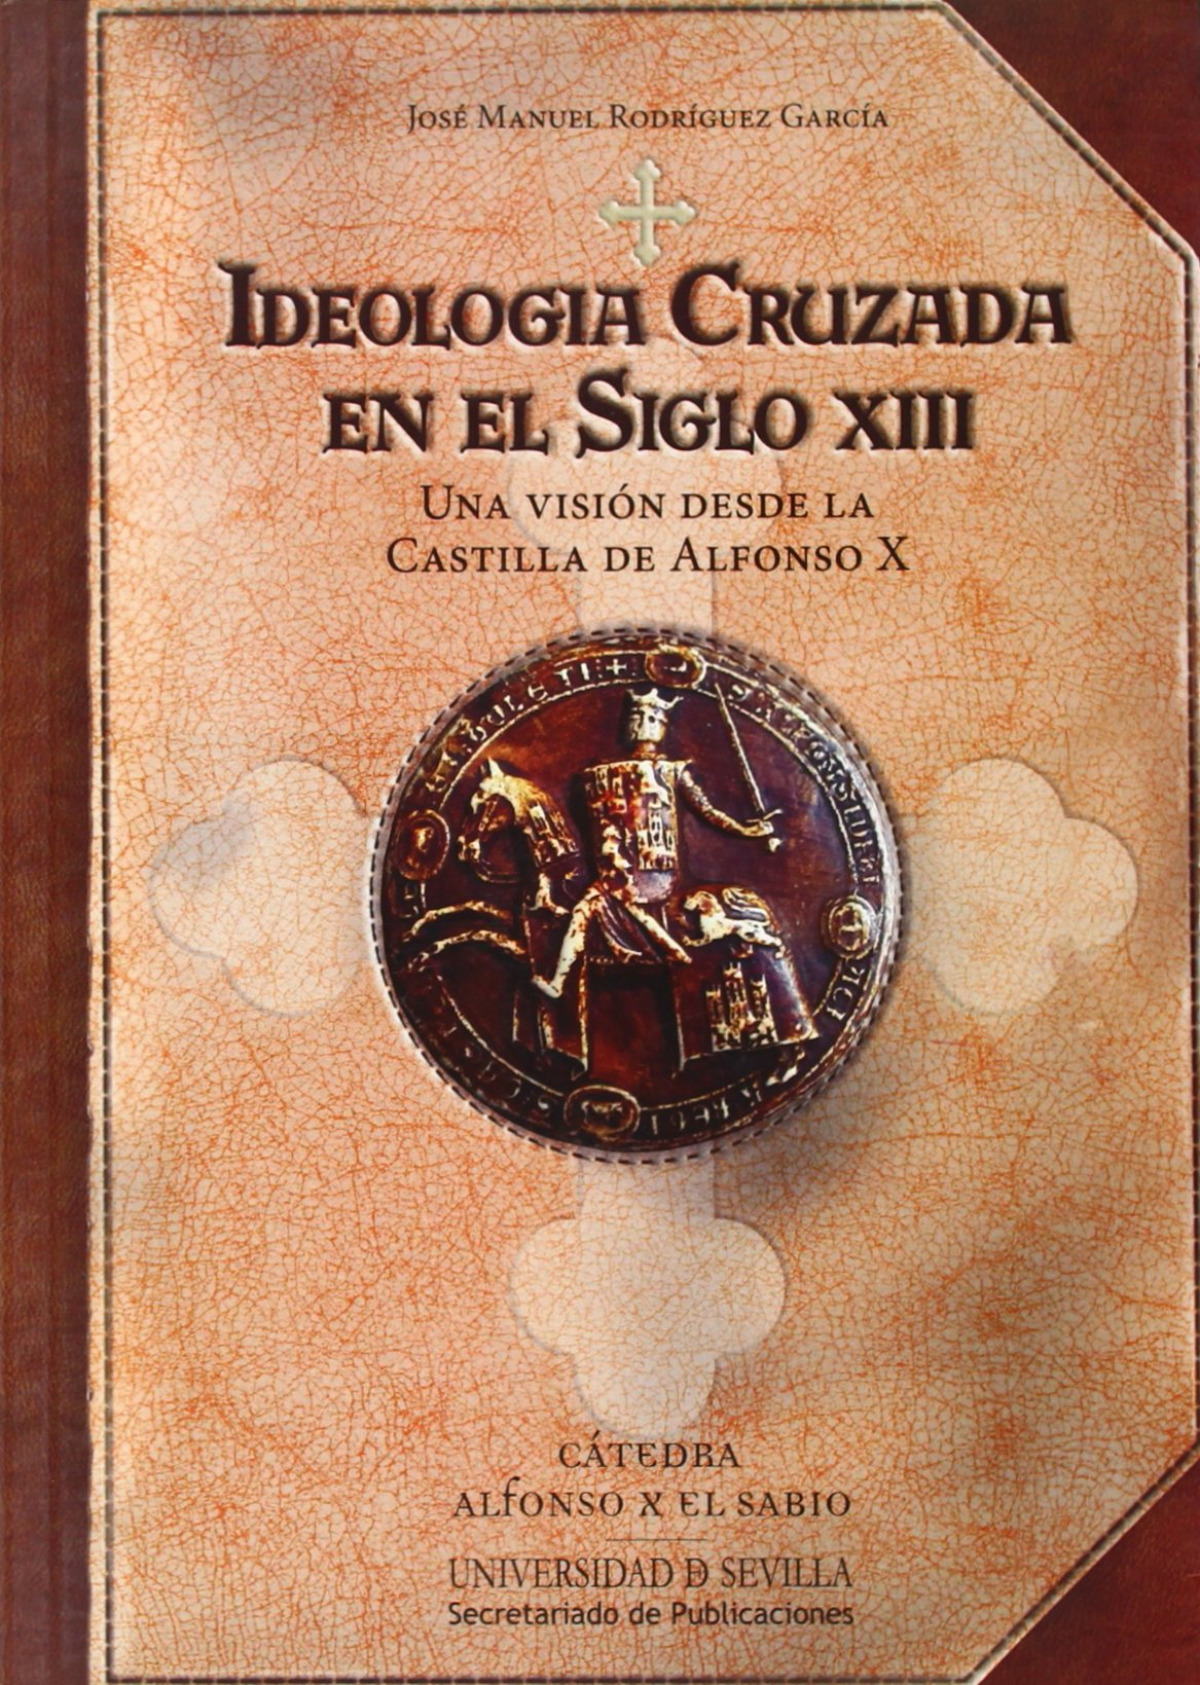 Ideologia cruzada s. xiii - Rodriguez Garcia, Jose Manuel